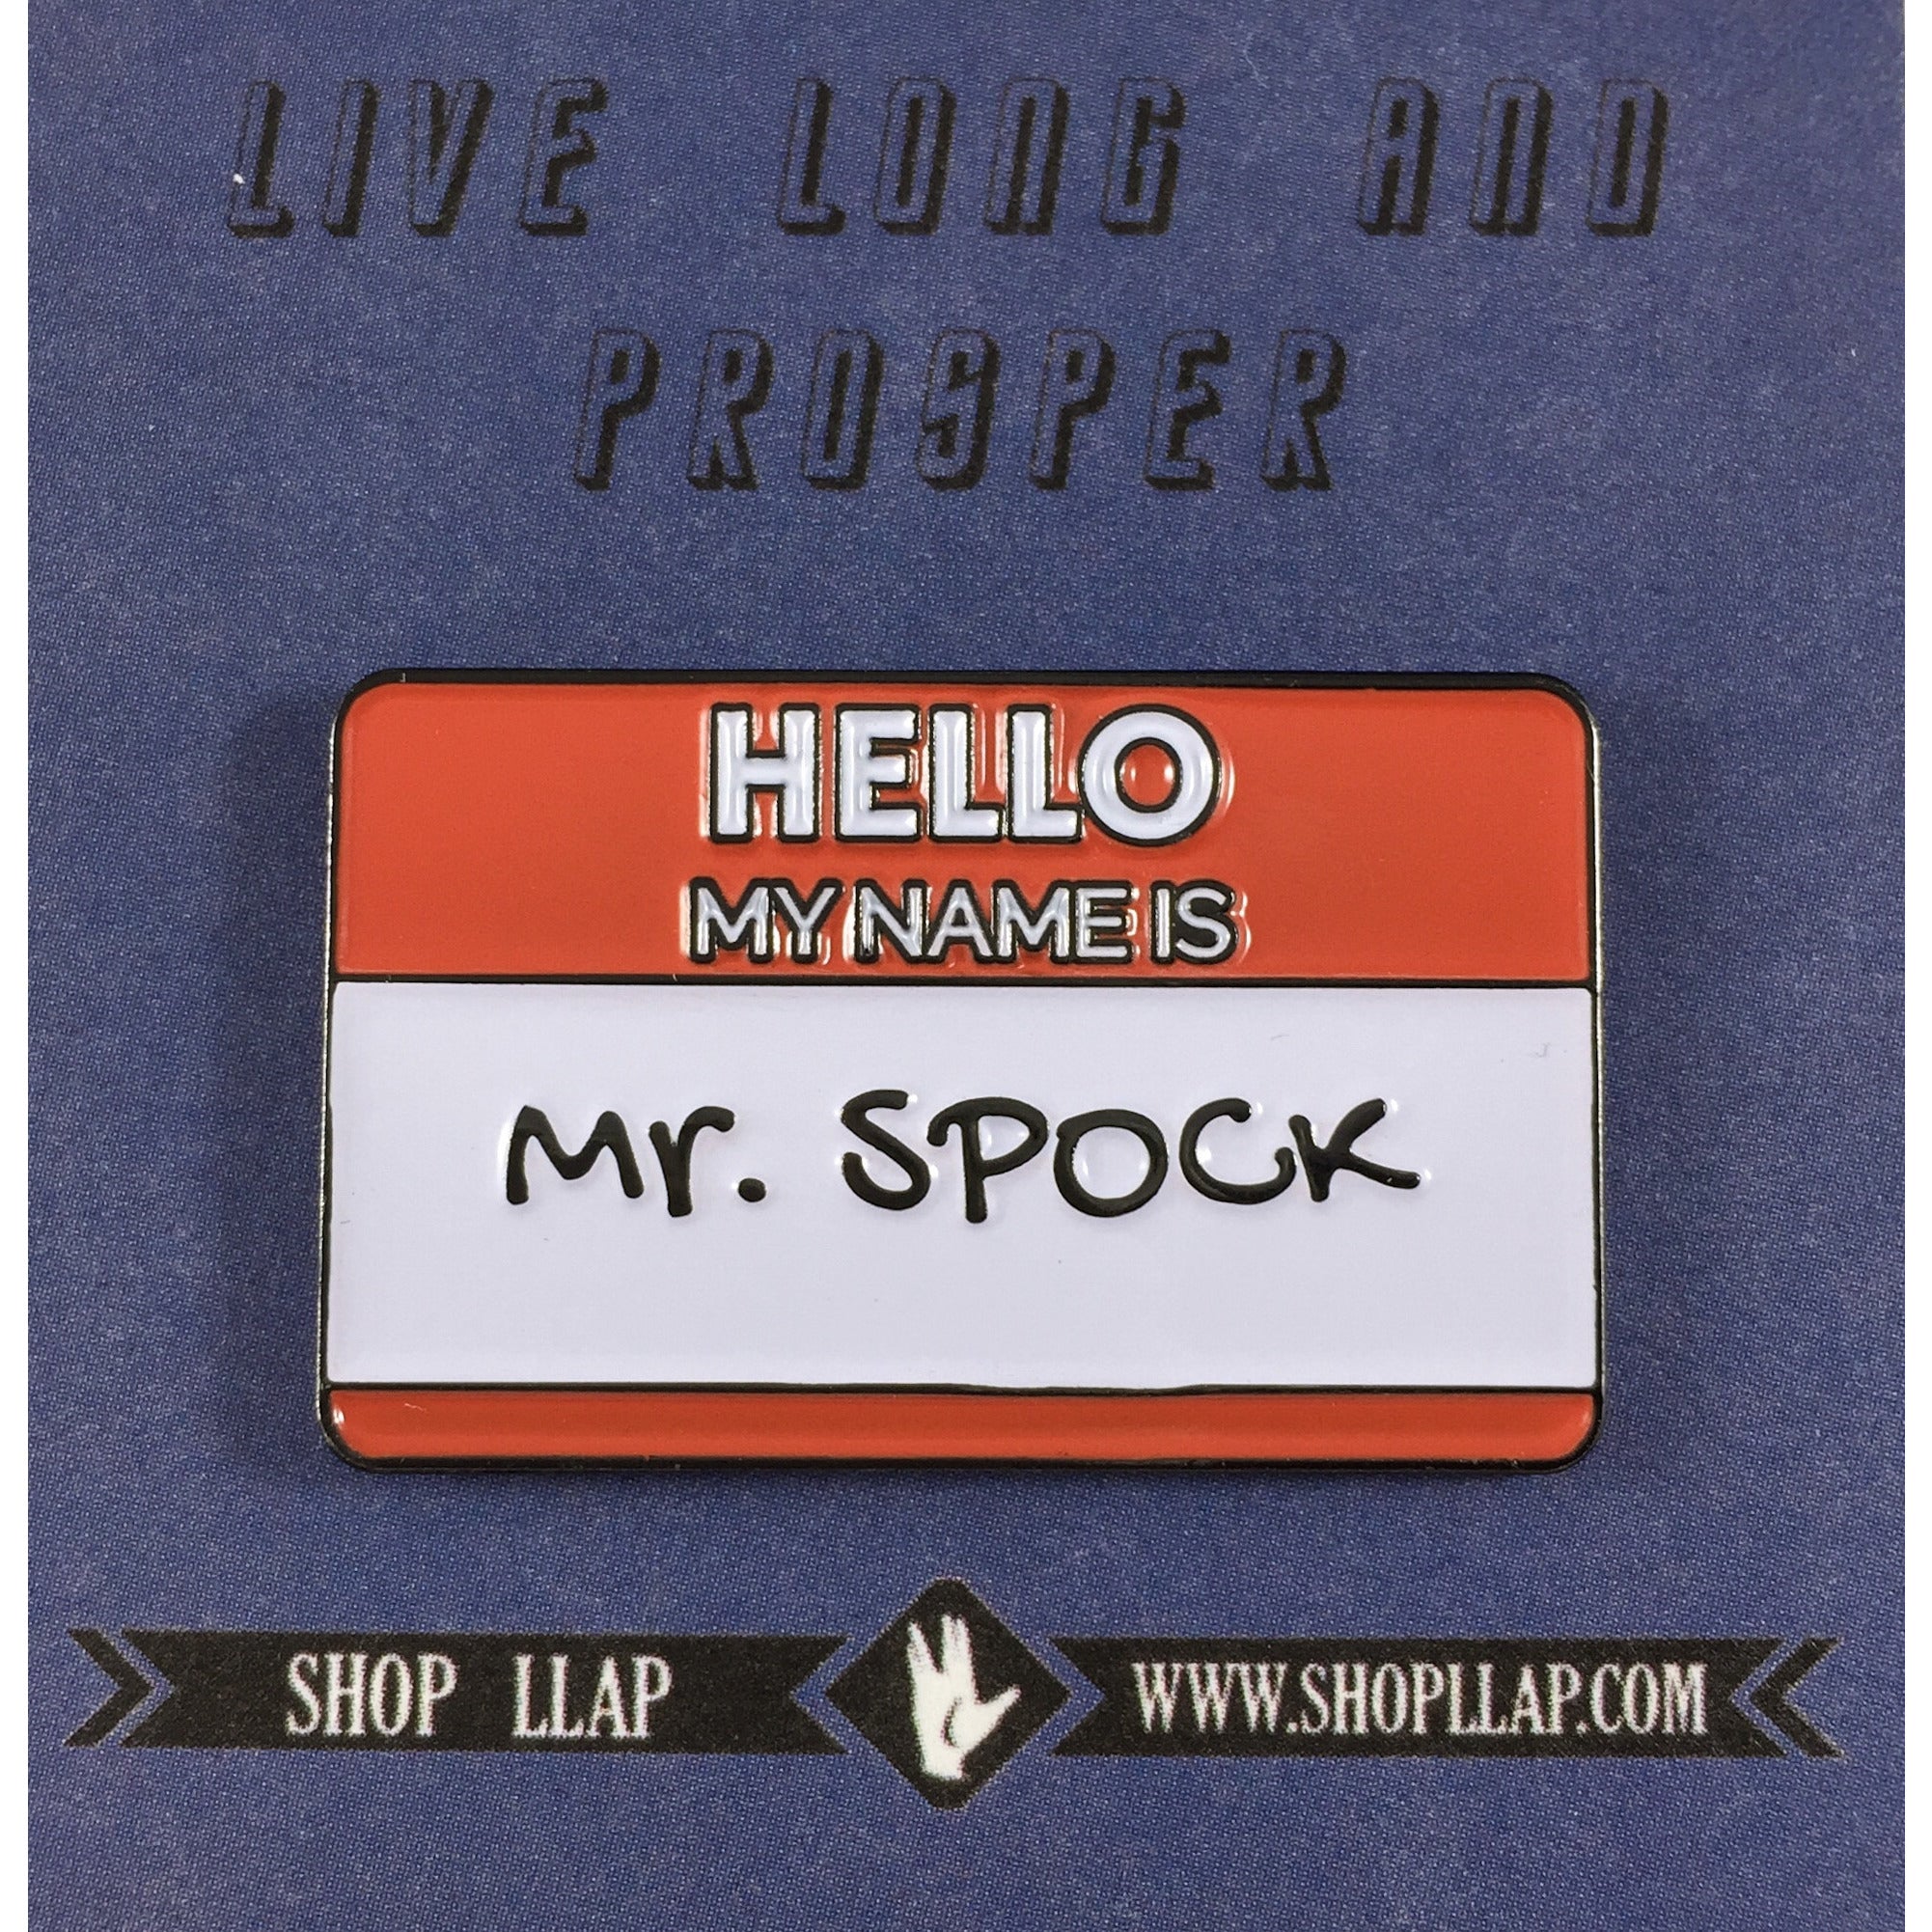 Hello My Name Is Mr. Spock - Name Tag Enamel Pin - Leonard Nimoy's Shop LLAP